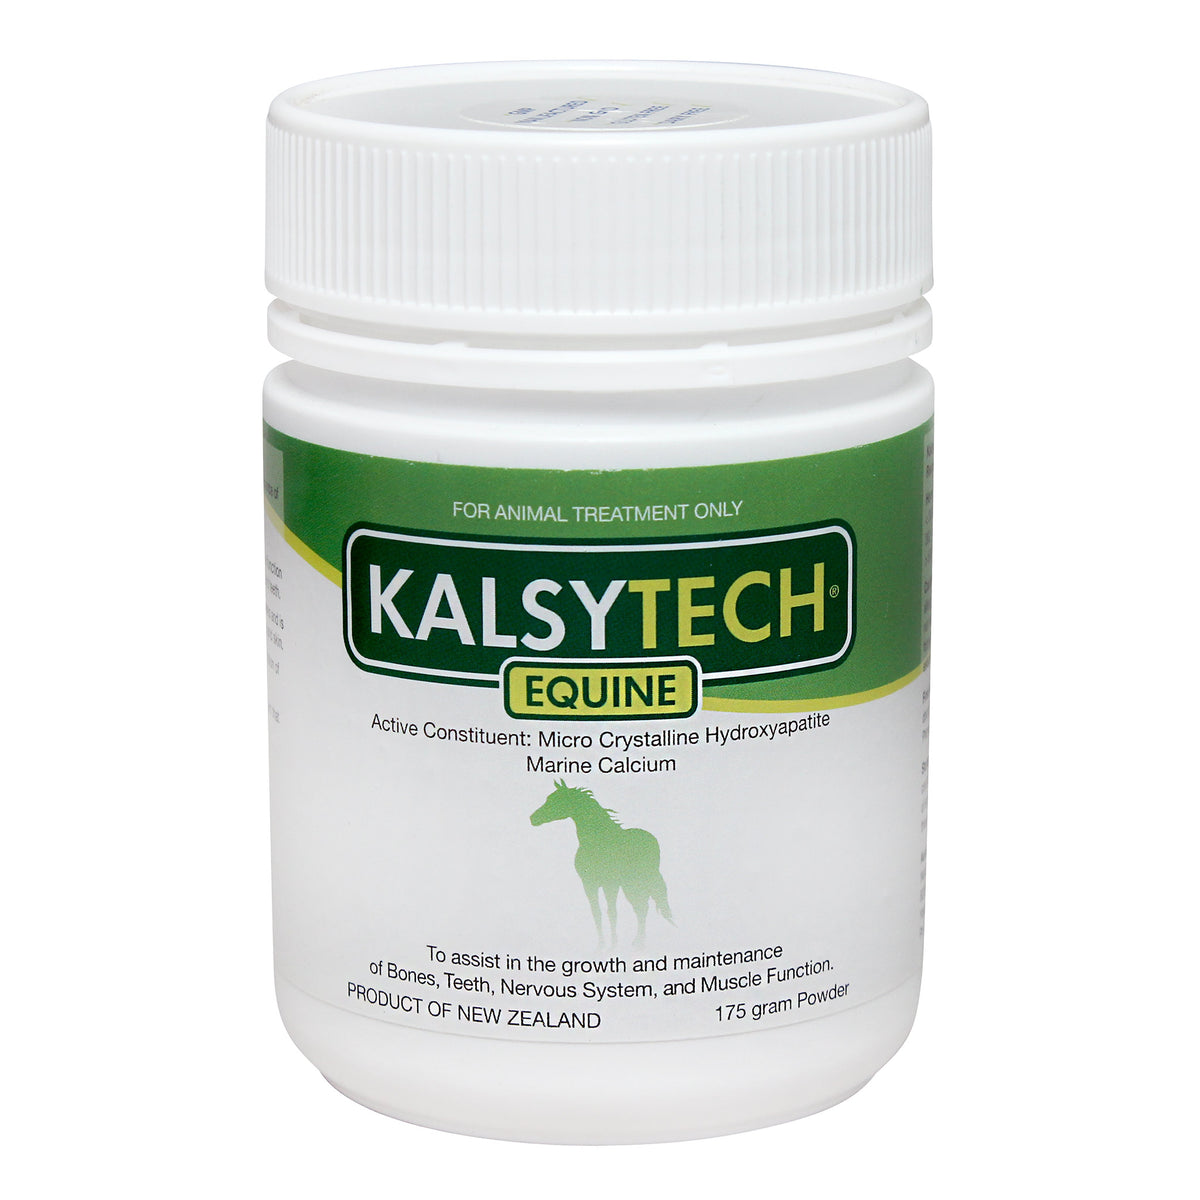 Kalsytech Equine Calcium Supplement